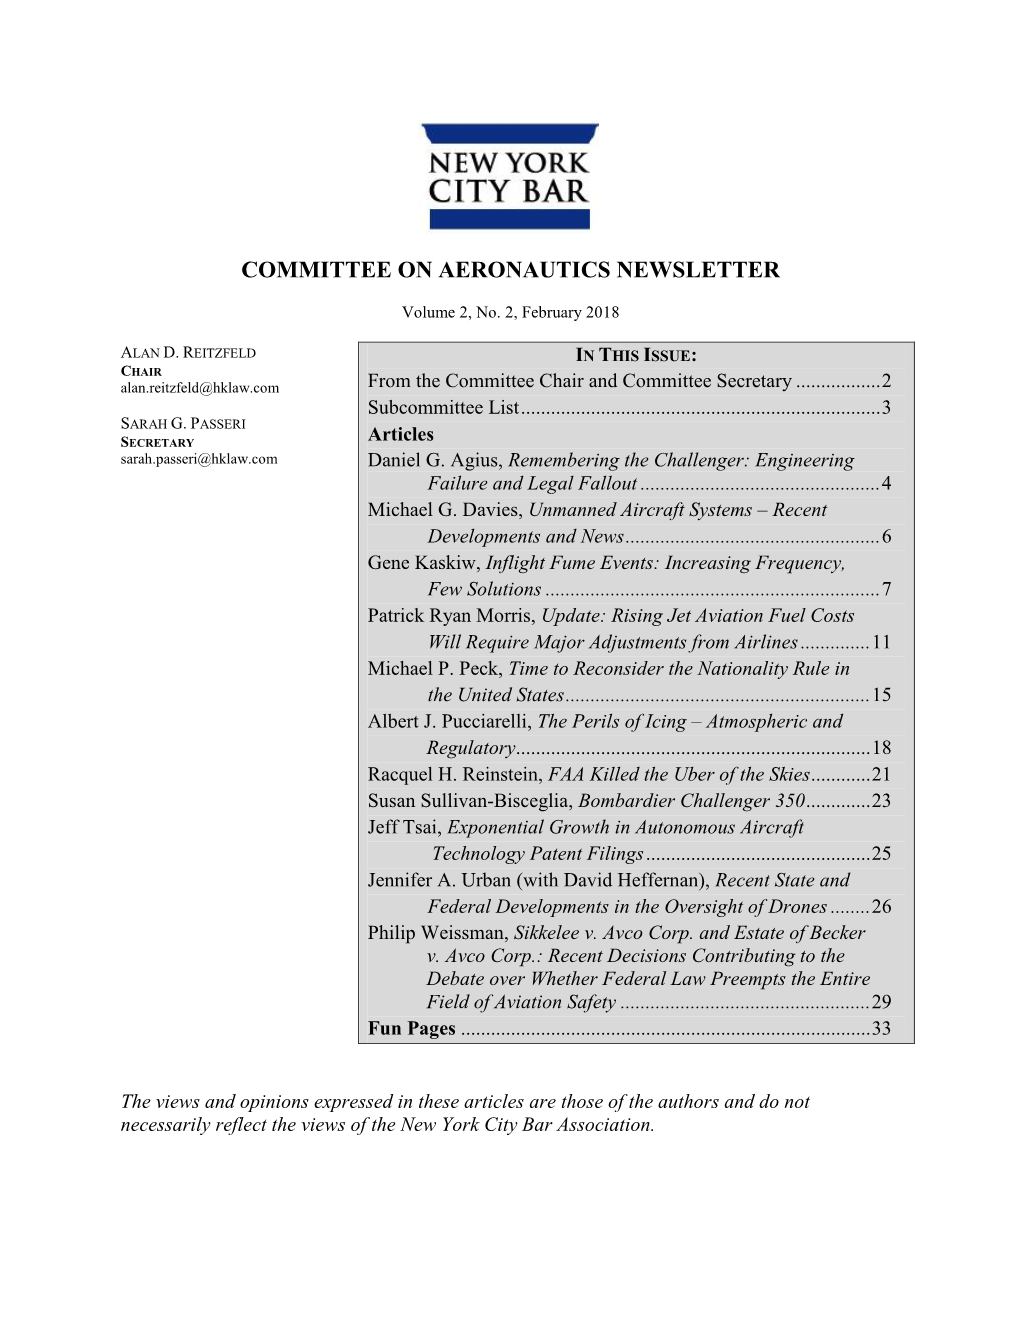 Committee on Aeronautics Newsletter